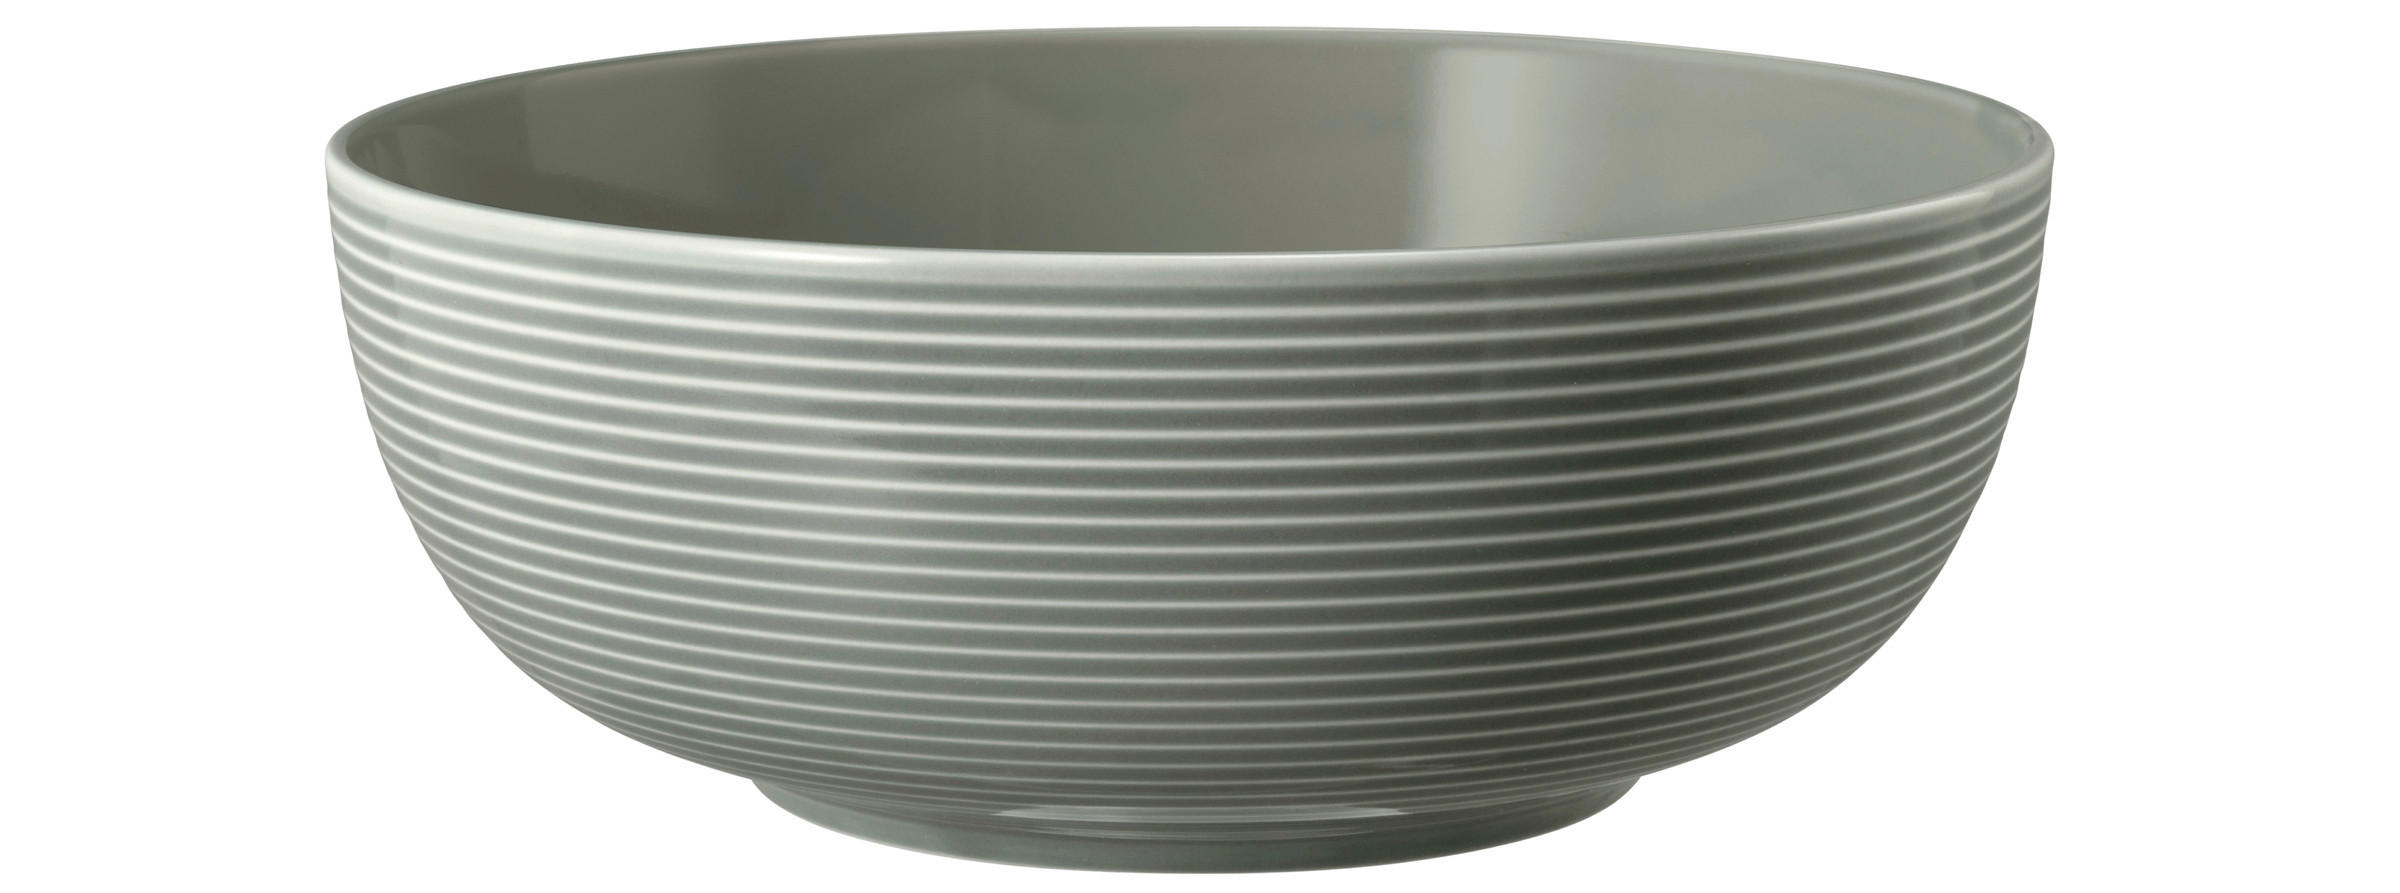 SCHÜSSEL Keramik Porzellan  - Grau, Basics, Keramik (21/21/12cm) - Seltmann Weiden